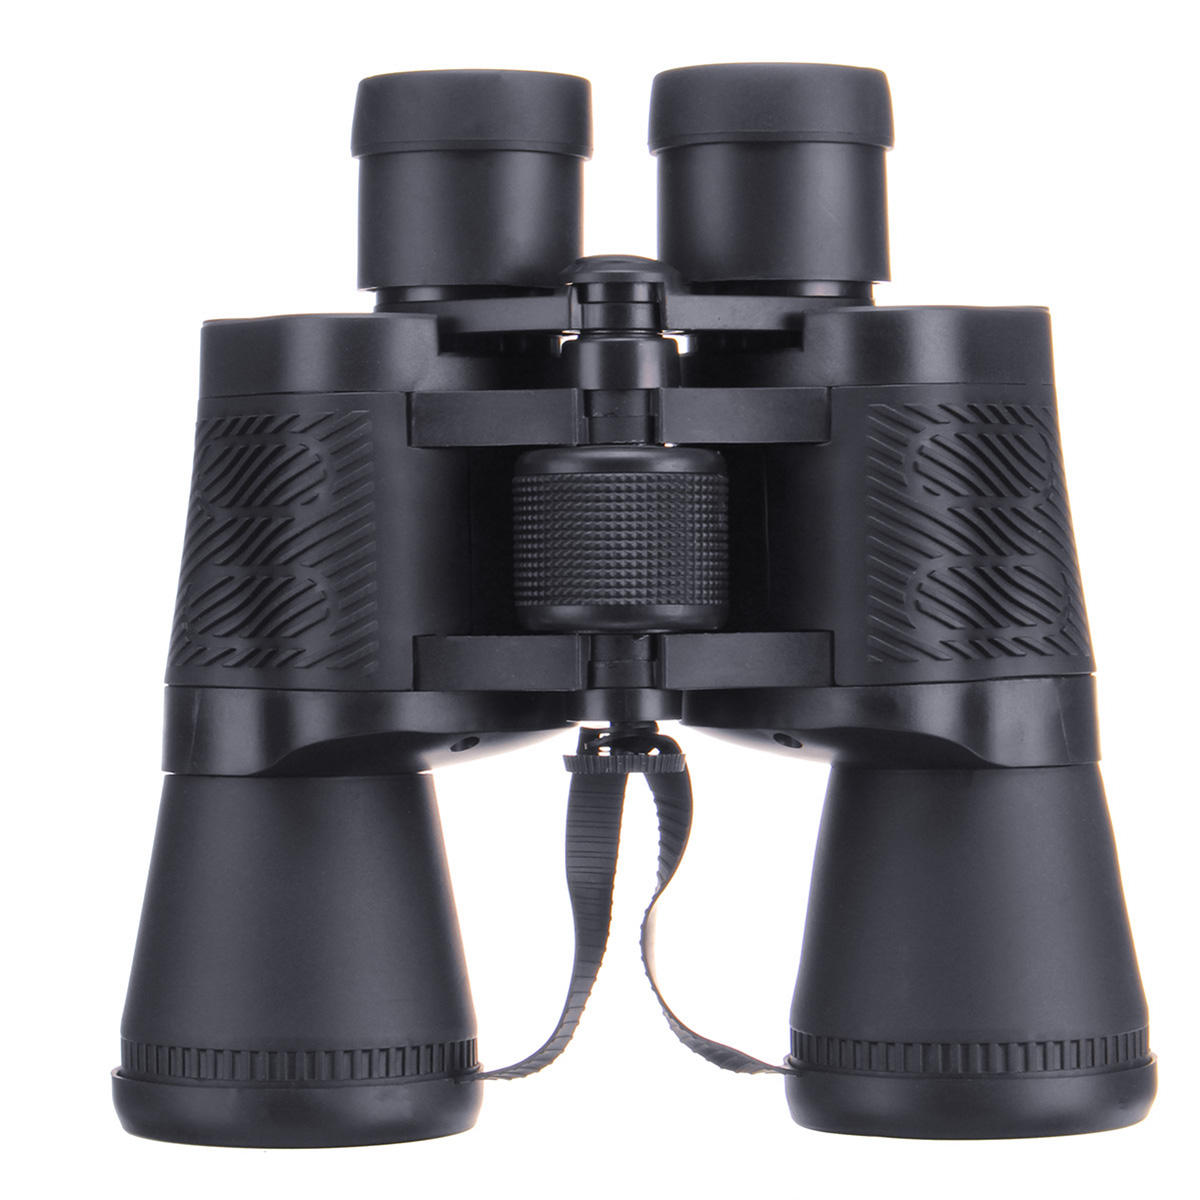 Image of 50x50 BAK4 Binocular Day/Night Vision Outdoor Traveling Camping Telescope